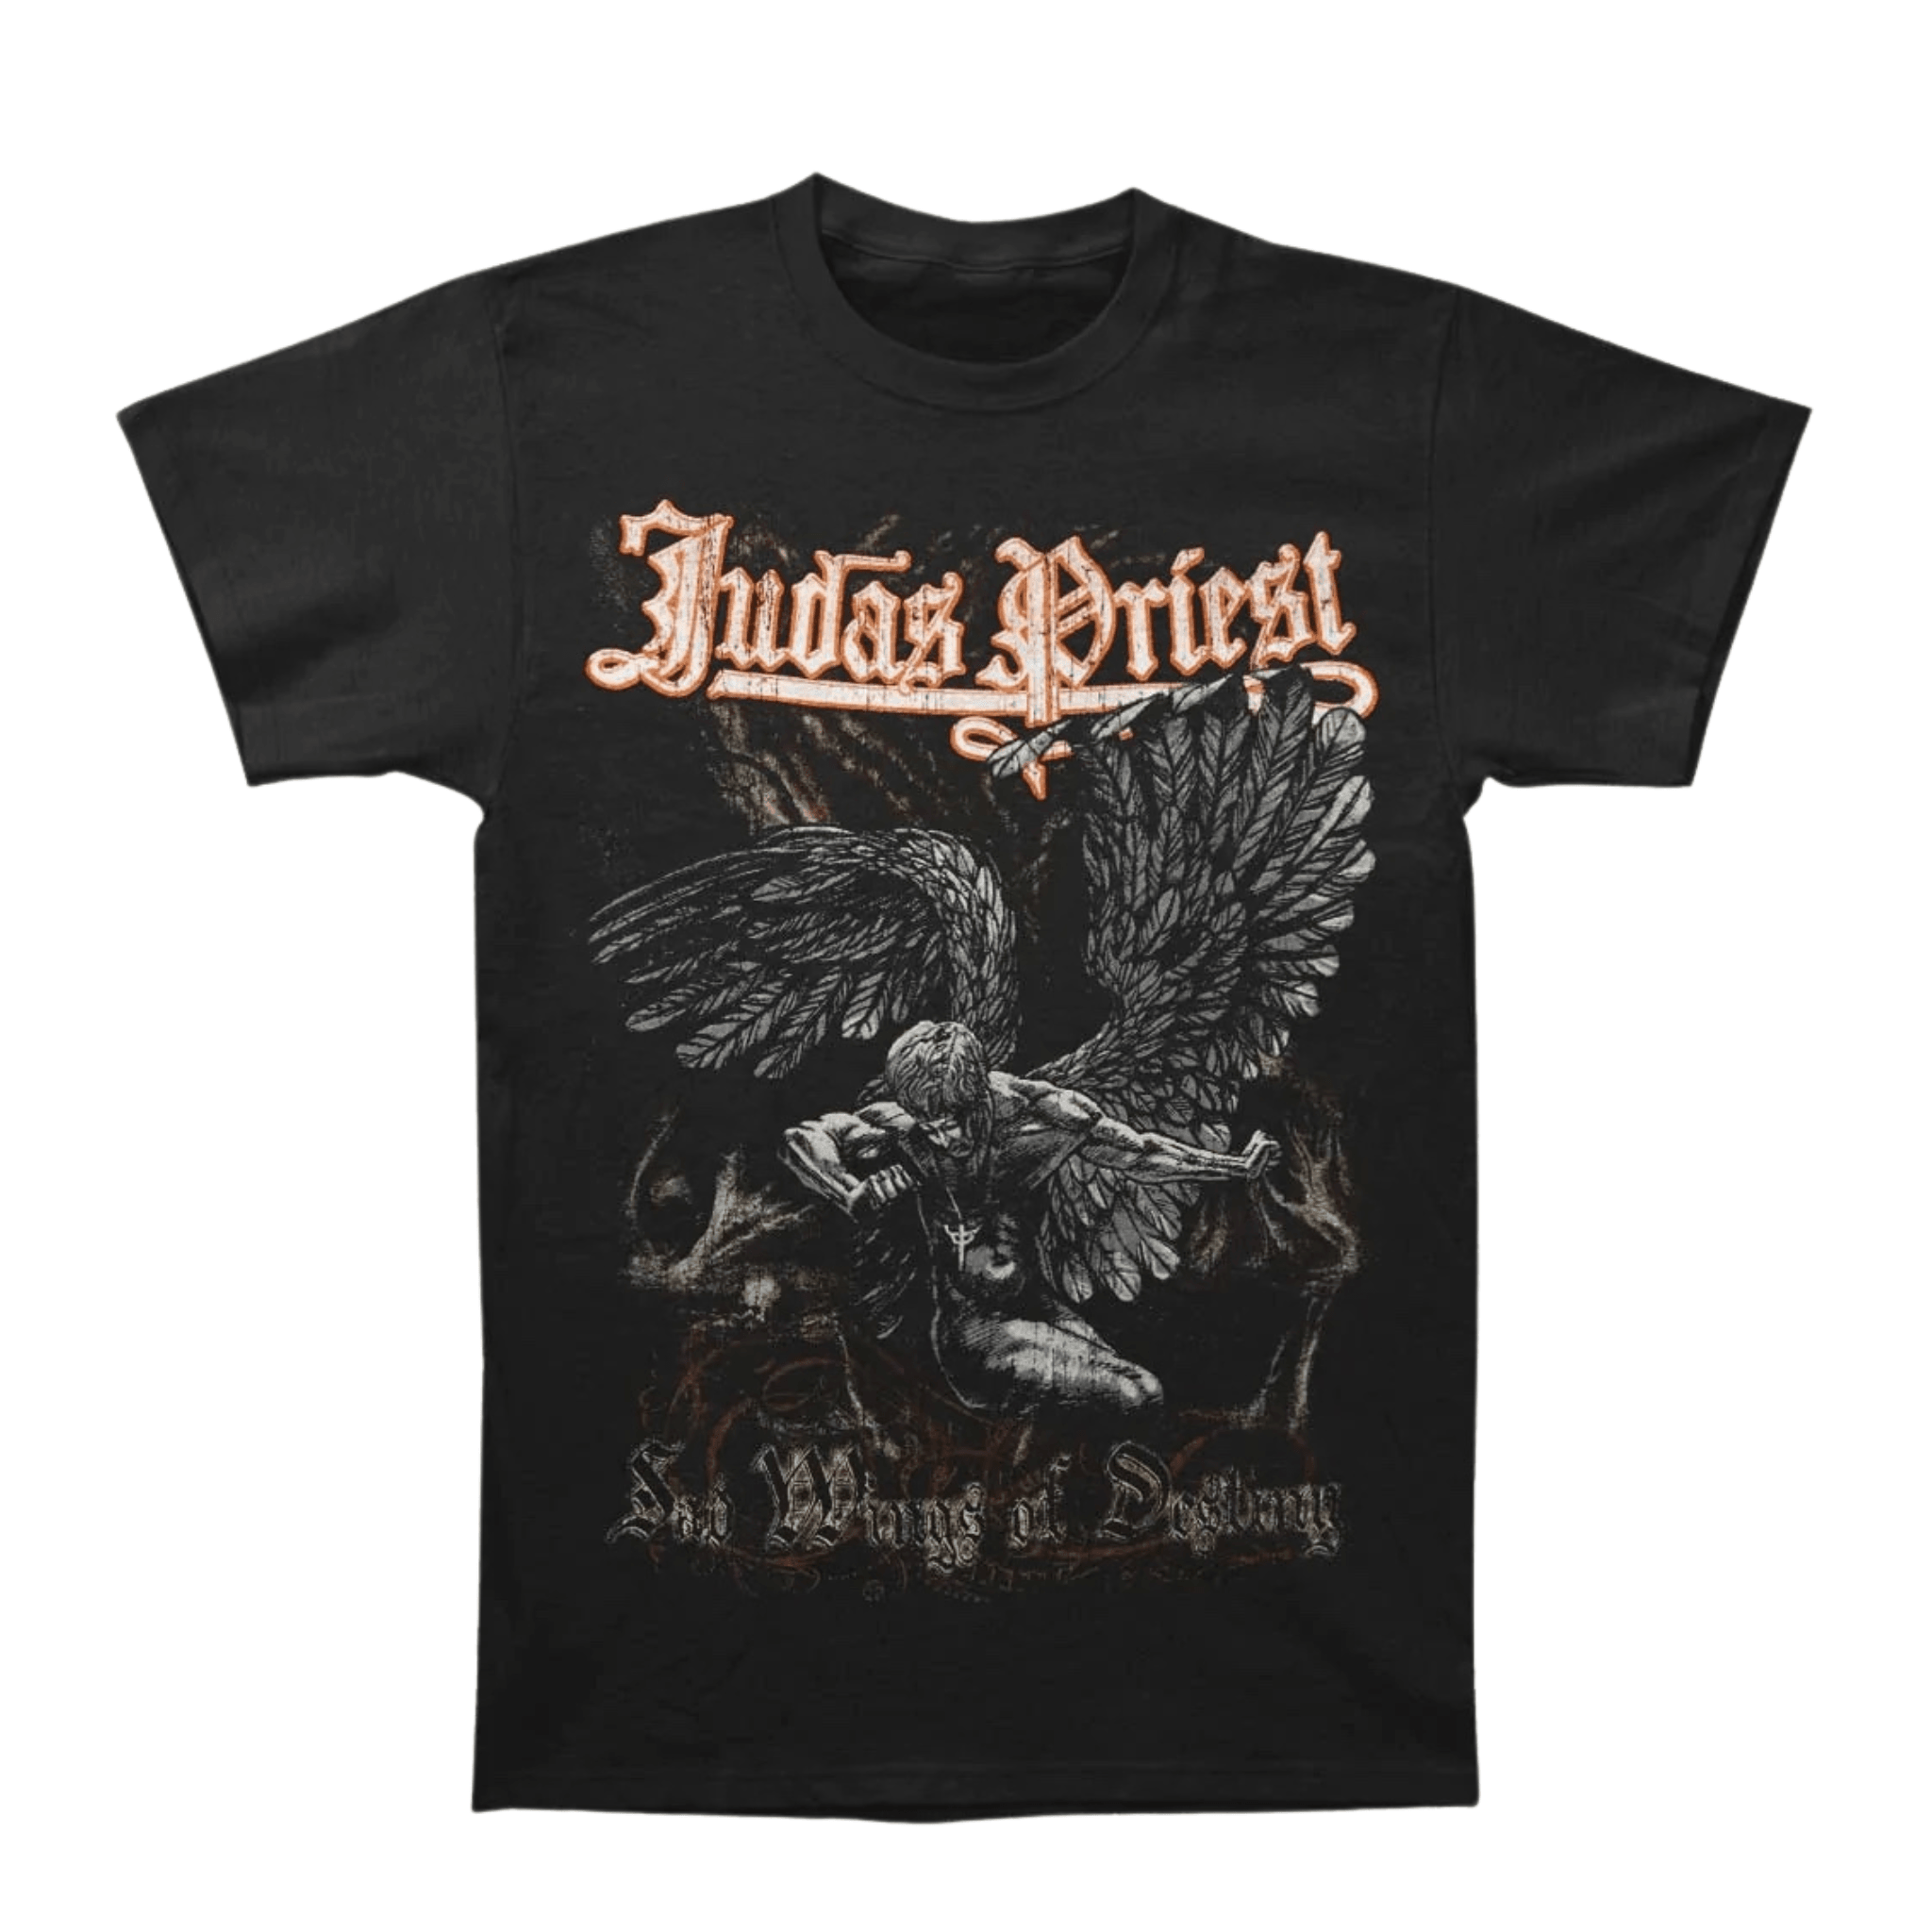 Judas Priest - Sad Wings of Destiny Black T-Shirt - MNRK Heavy